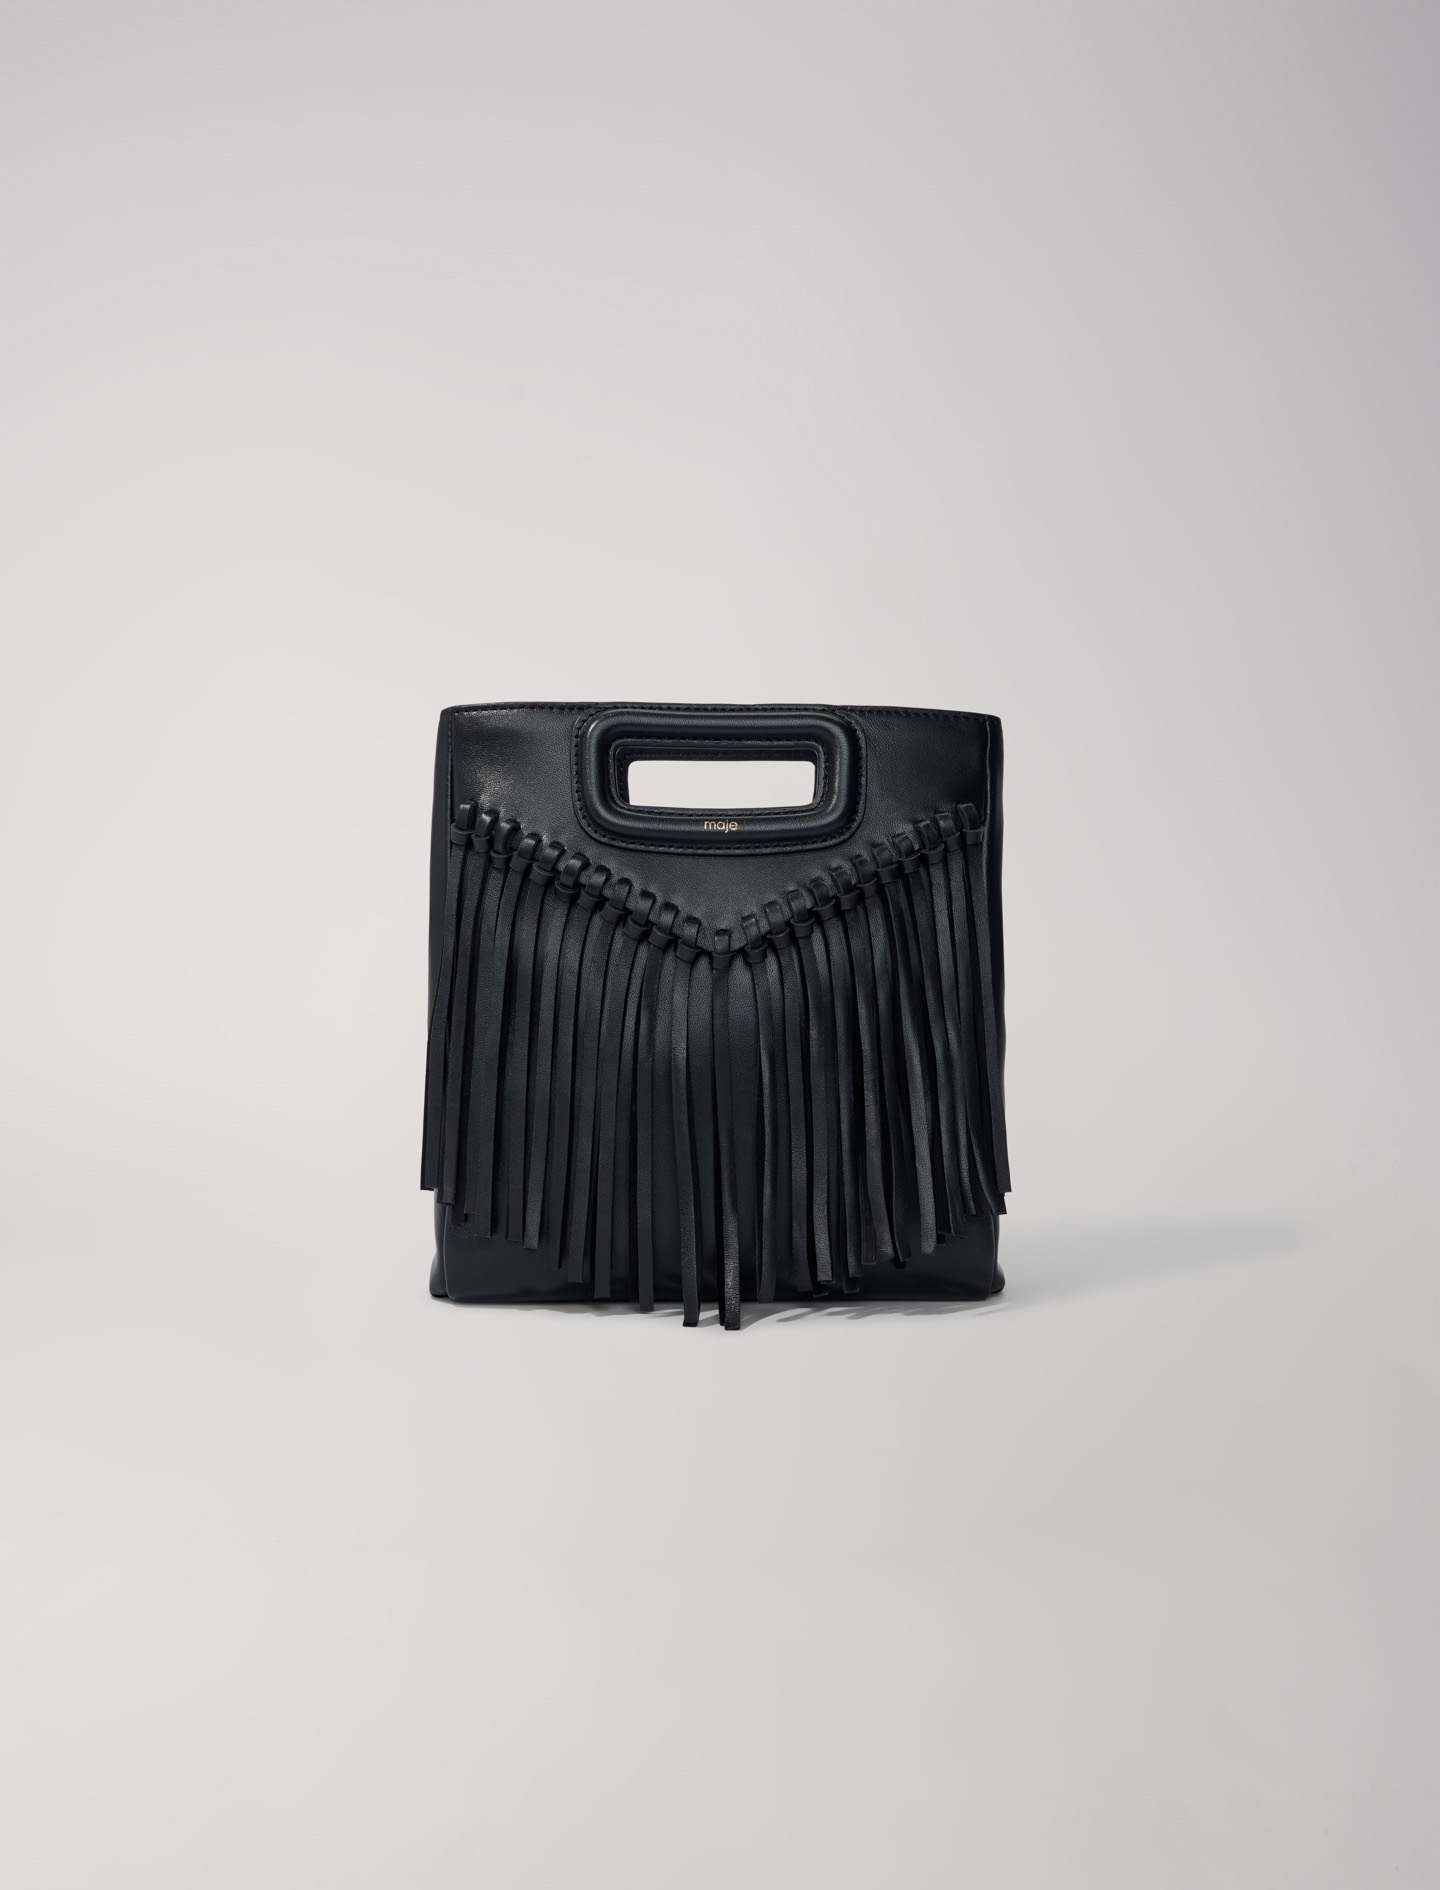 Maje Woman's polyester Fringed leather M bag for Spring/Summer, in color Black / Black